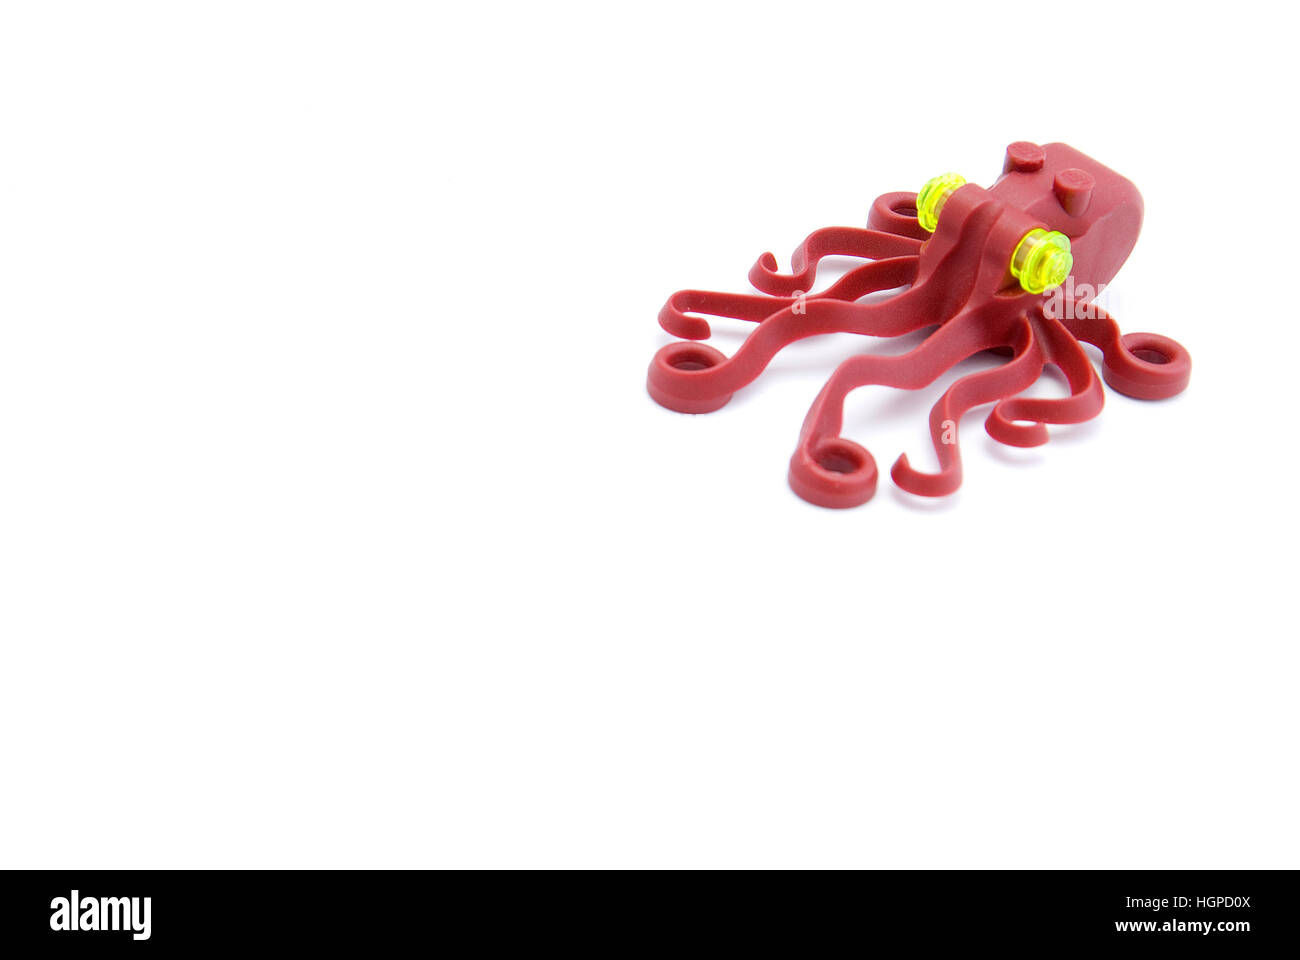 Lego Octopus figure Stock Photo